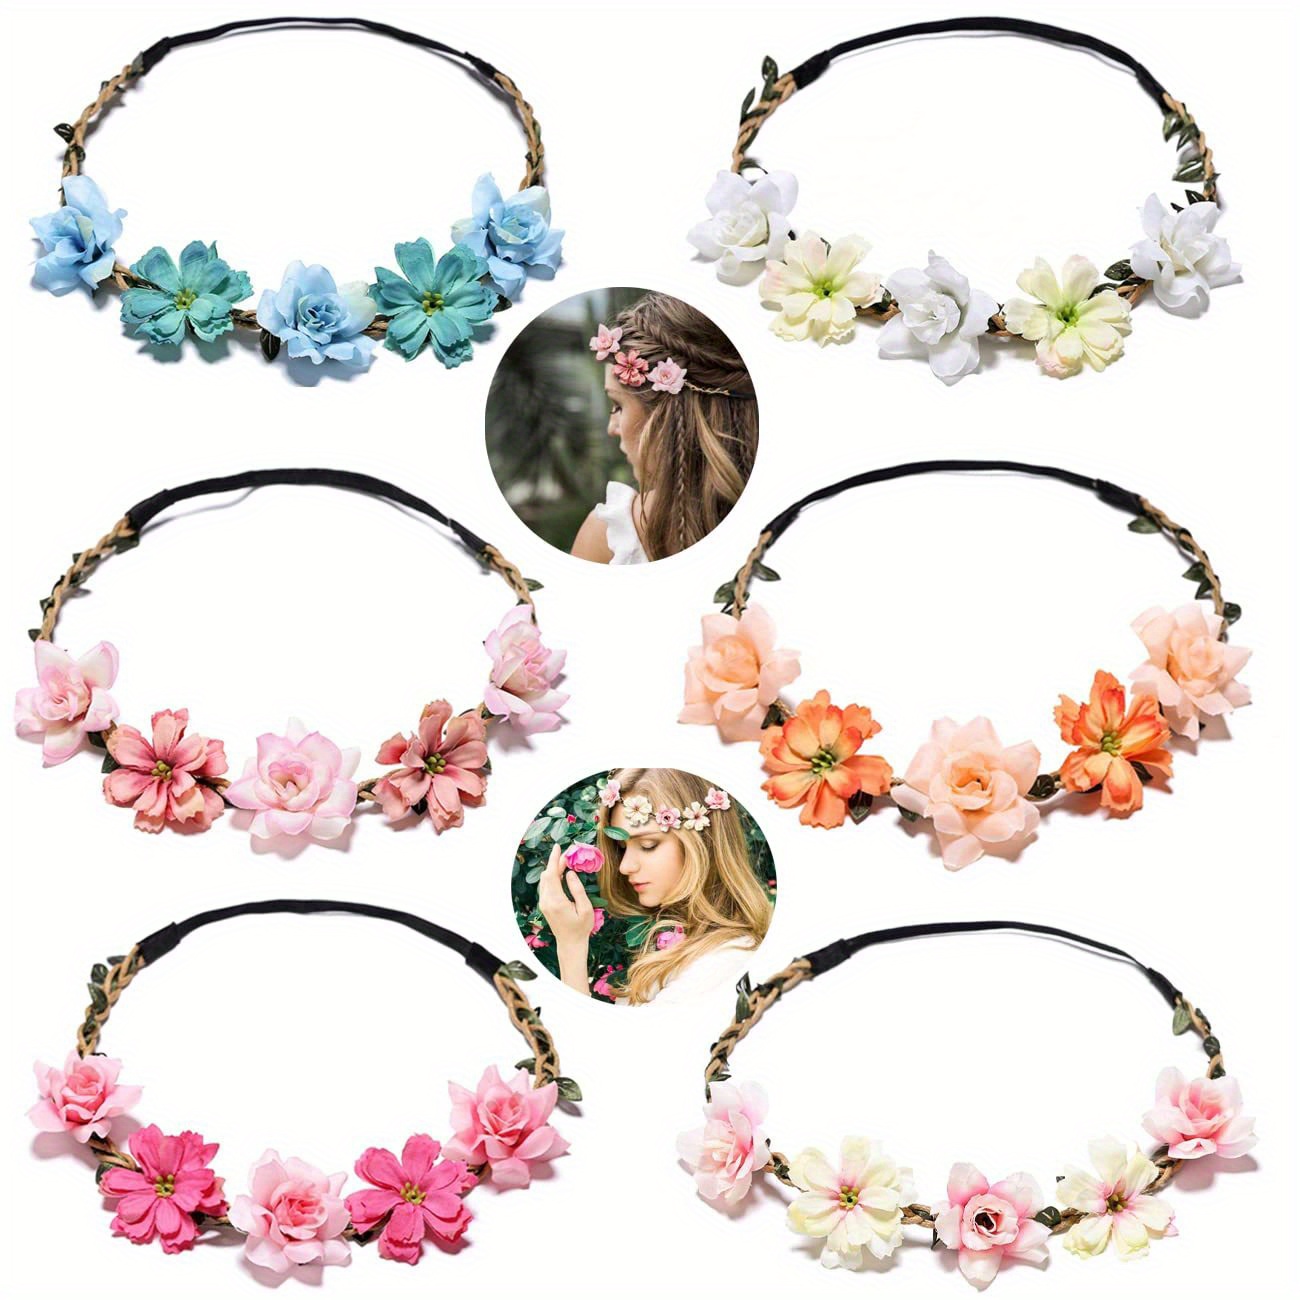 

6 Pcs Cotton Blend Non-woven Flower Crown Headbands For Women - Bohemian Floral Hair Wreaths Tiaras - Wedding Bridal Bridesmaid Headdress Hair Accessories